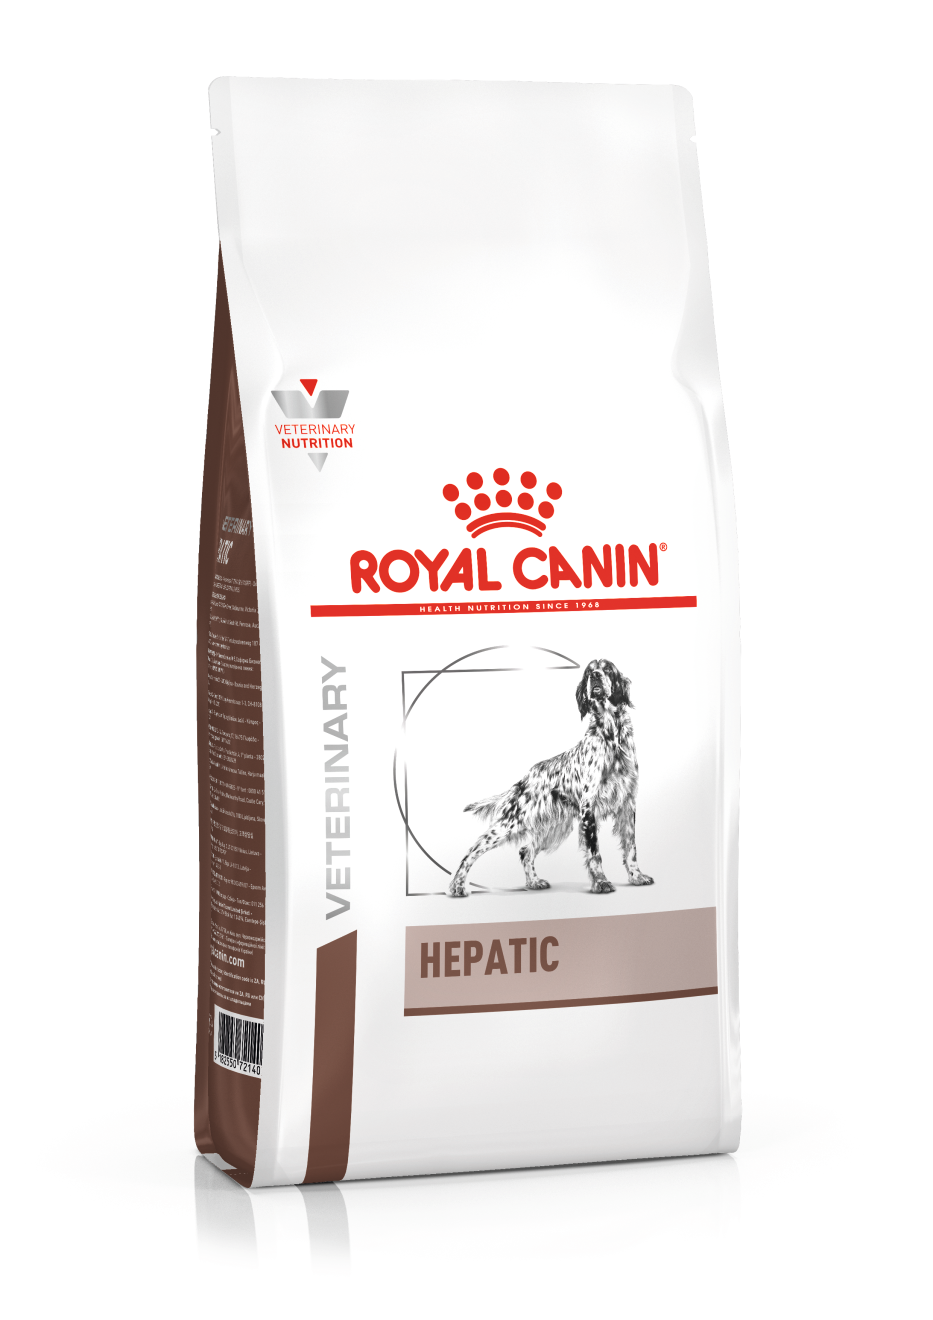 Royal Canin Hepatic Dog, 1.5 kg